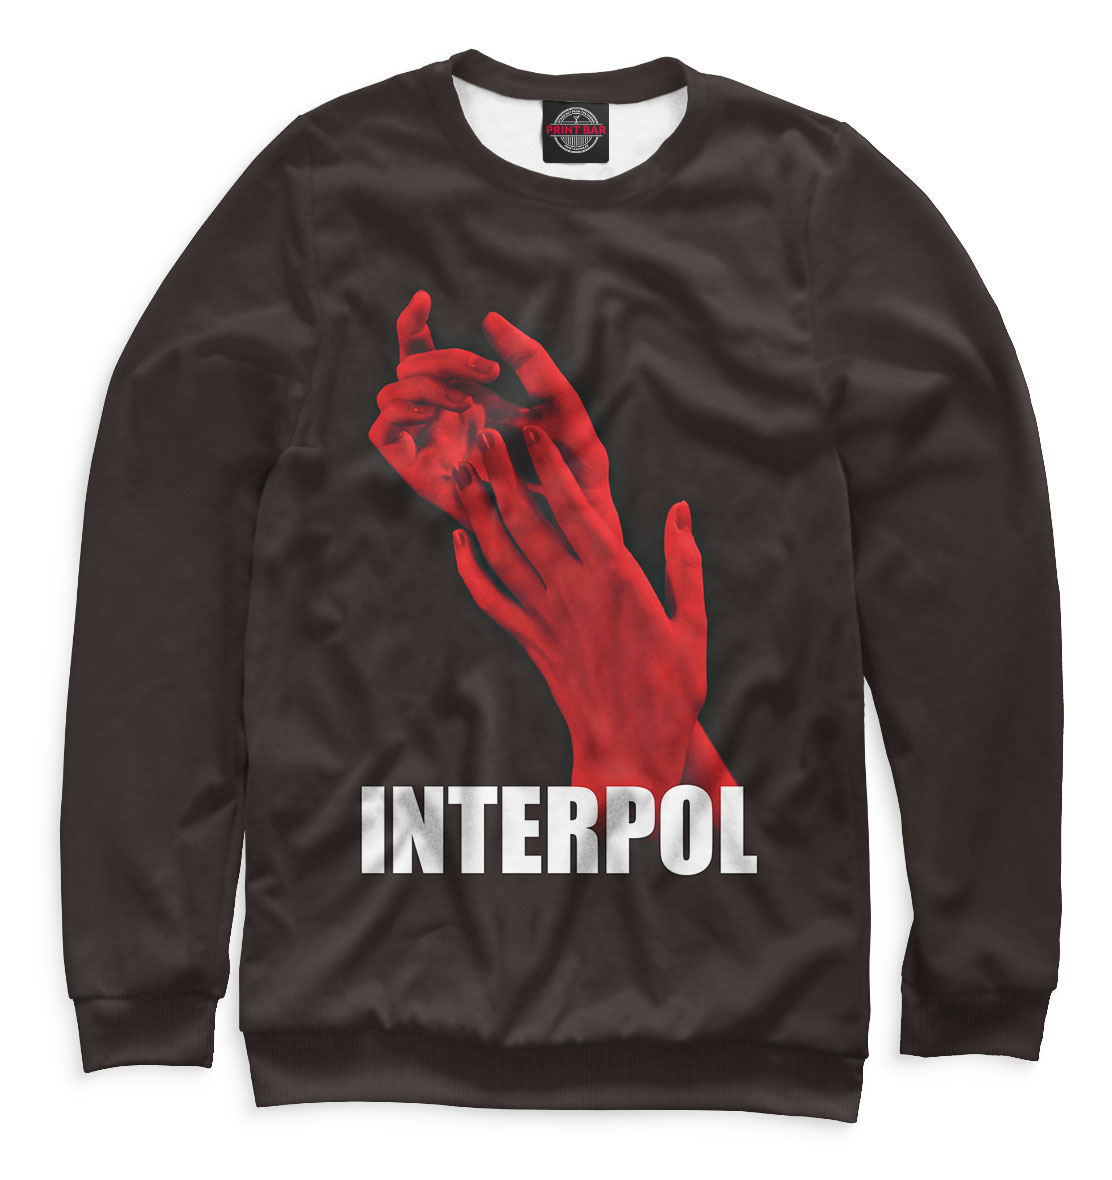 

Interpol